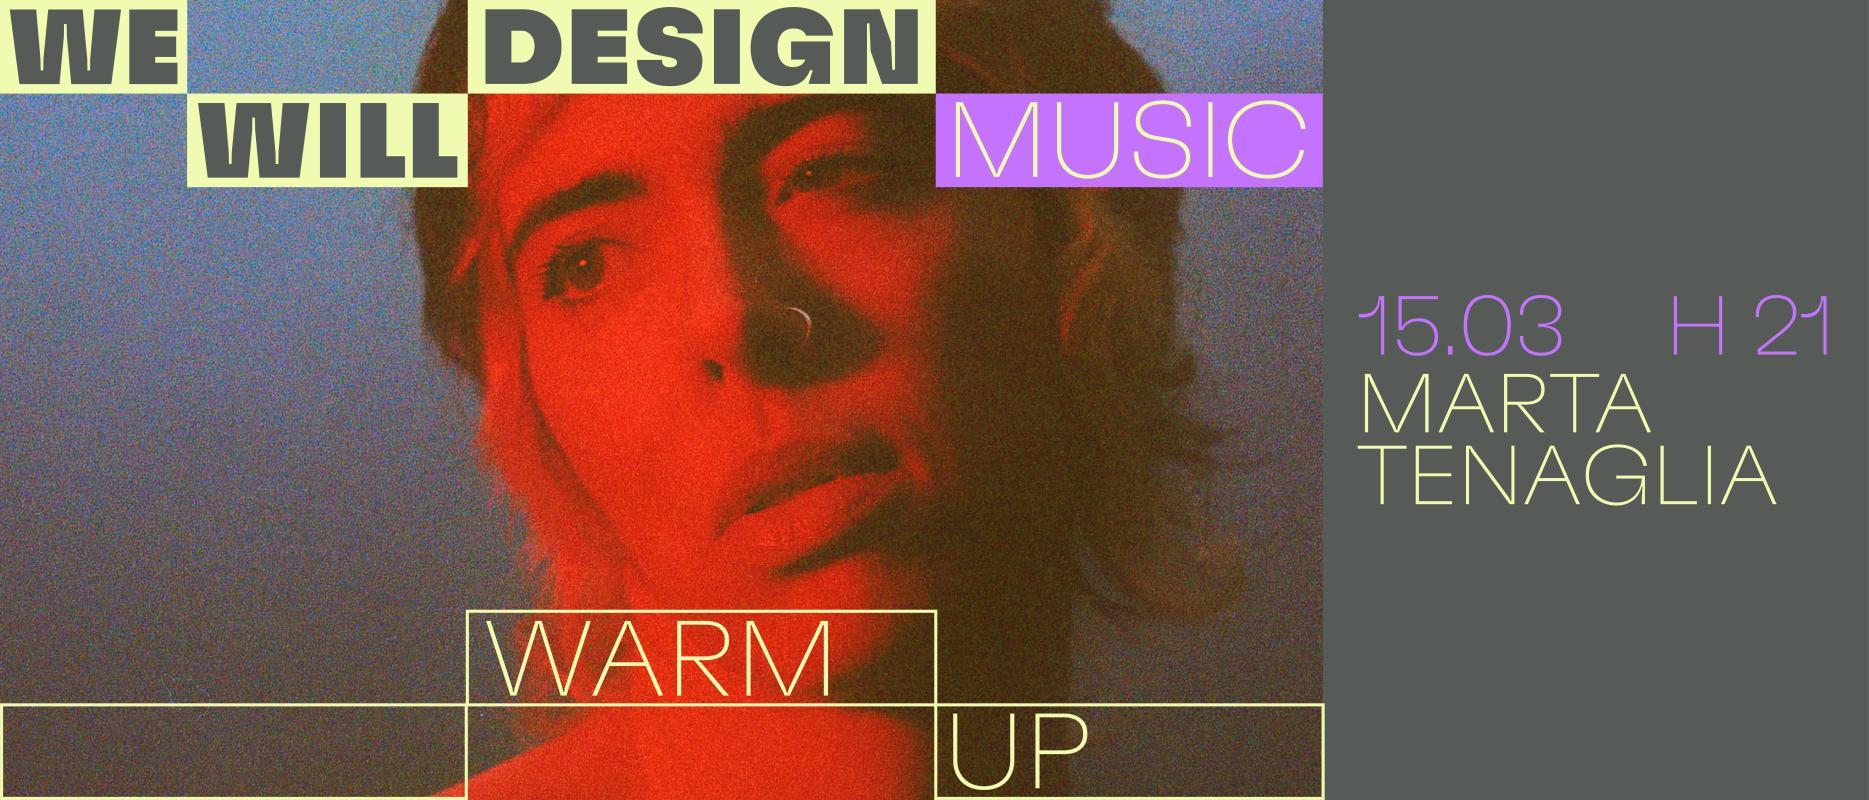 We Will Design Music - Warm Up | Marta Tenaglia